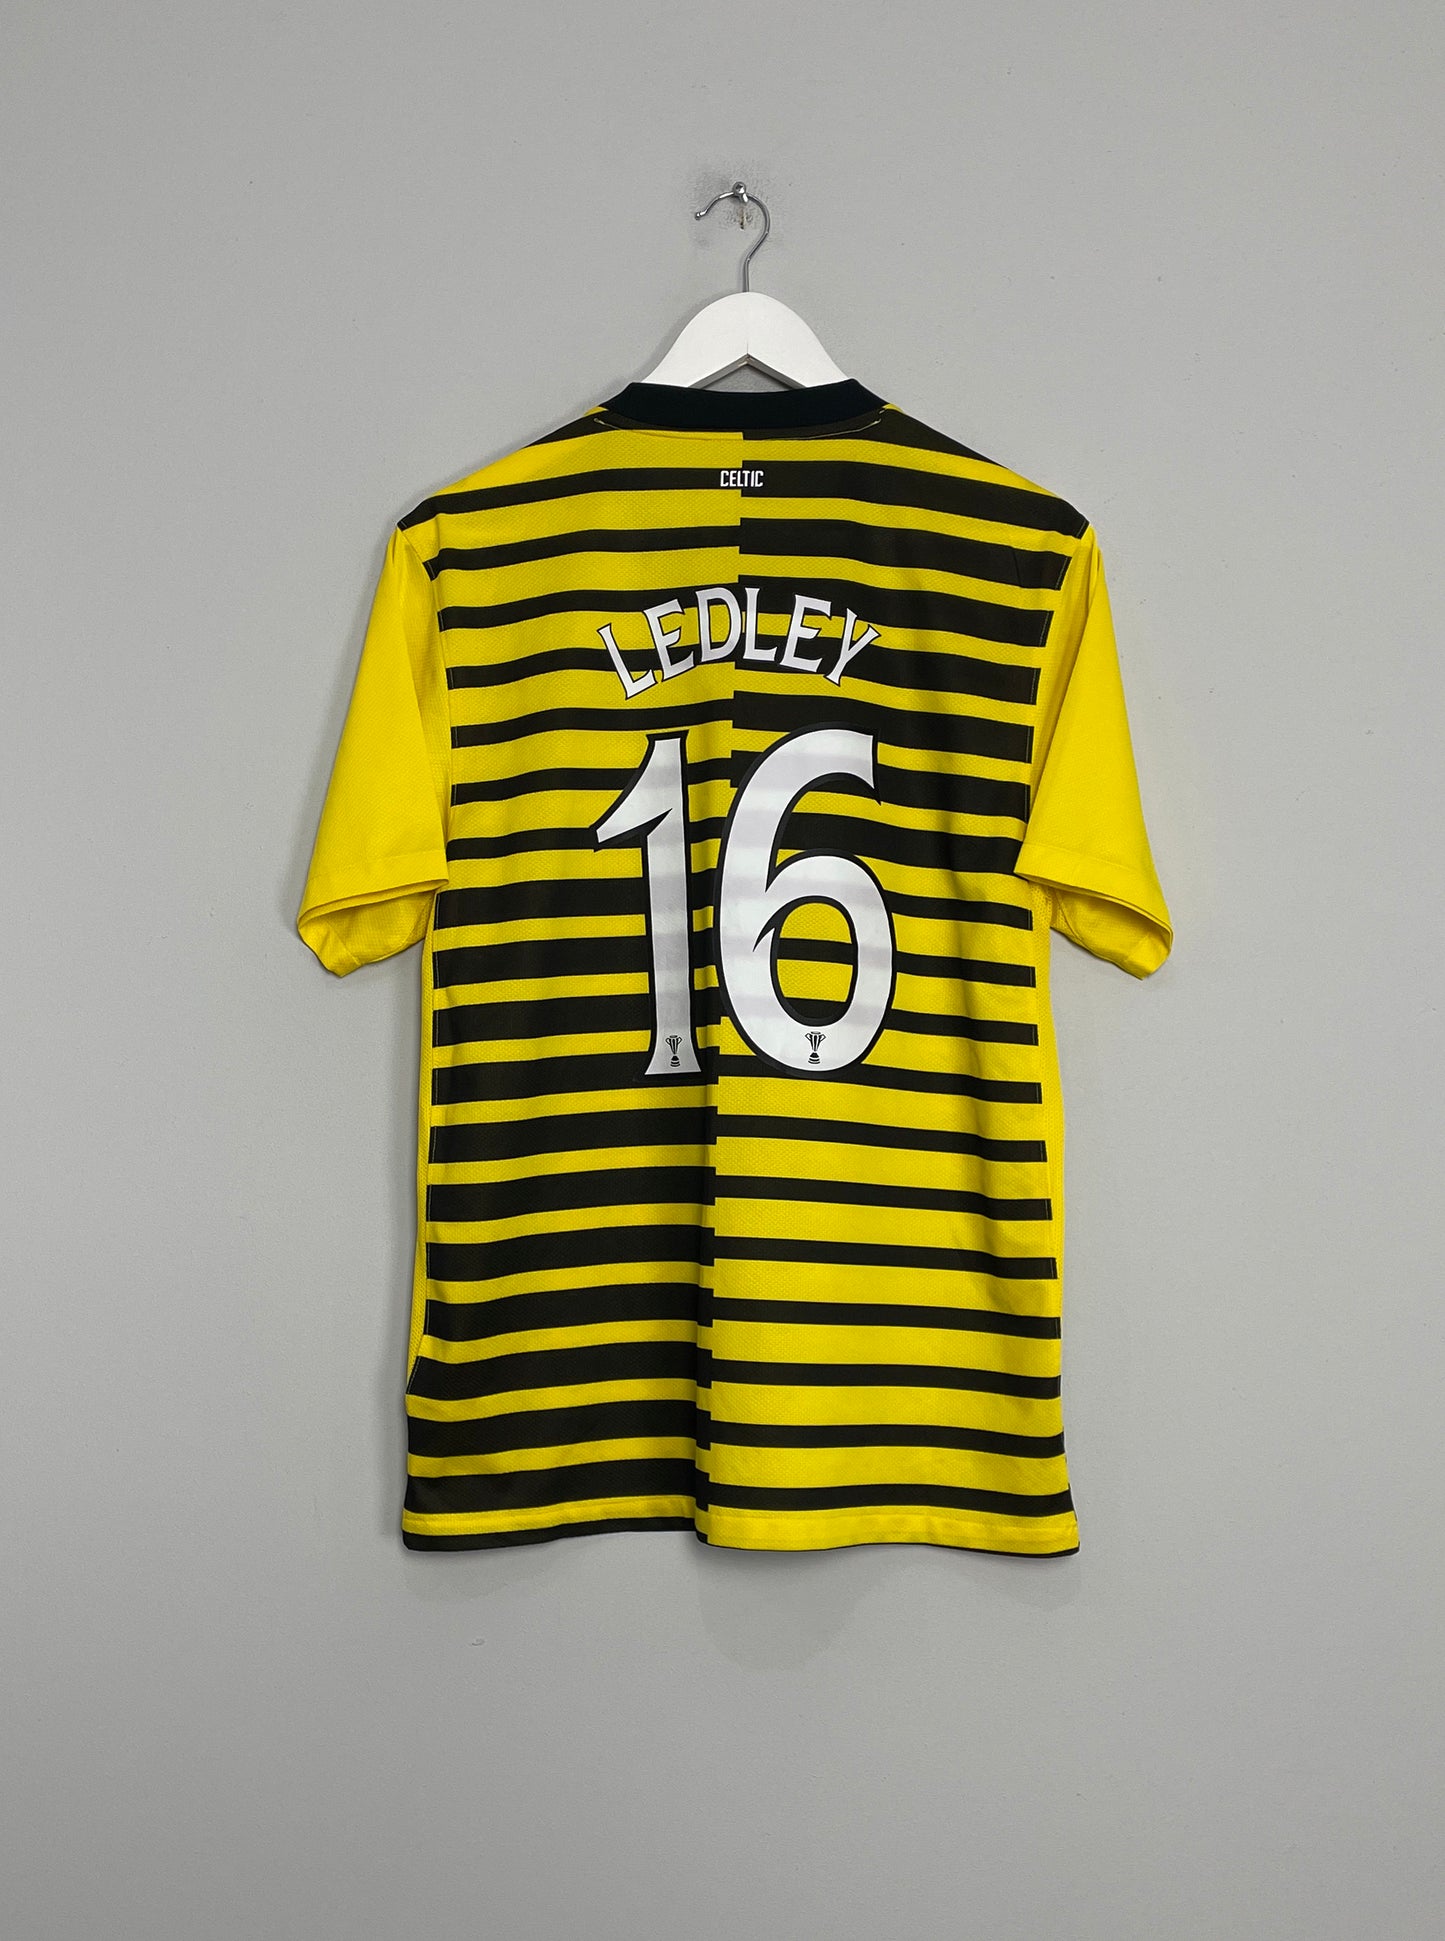 Image of the Celtic Ledley shirt from the 2011/12 season